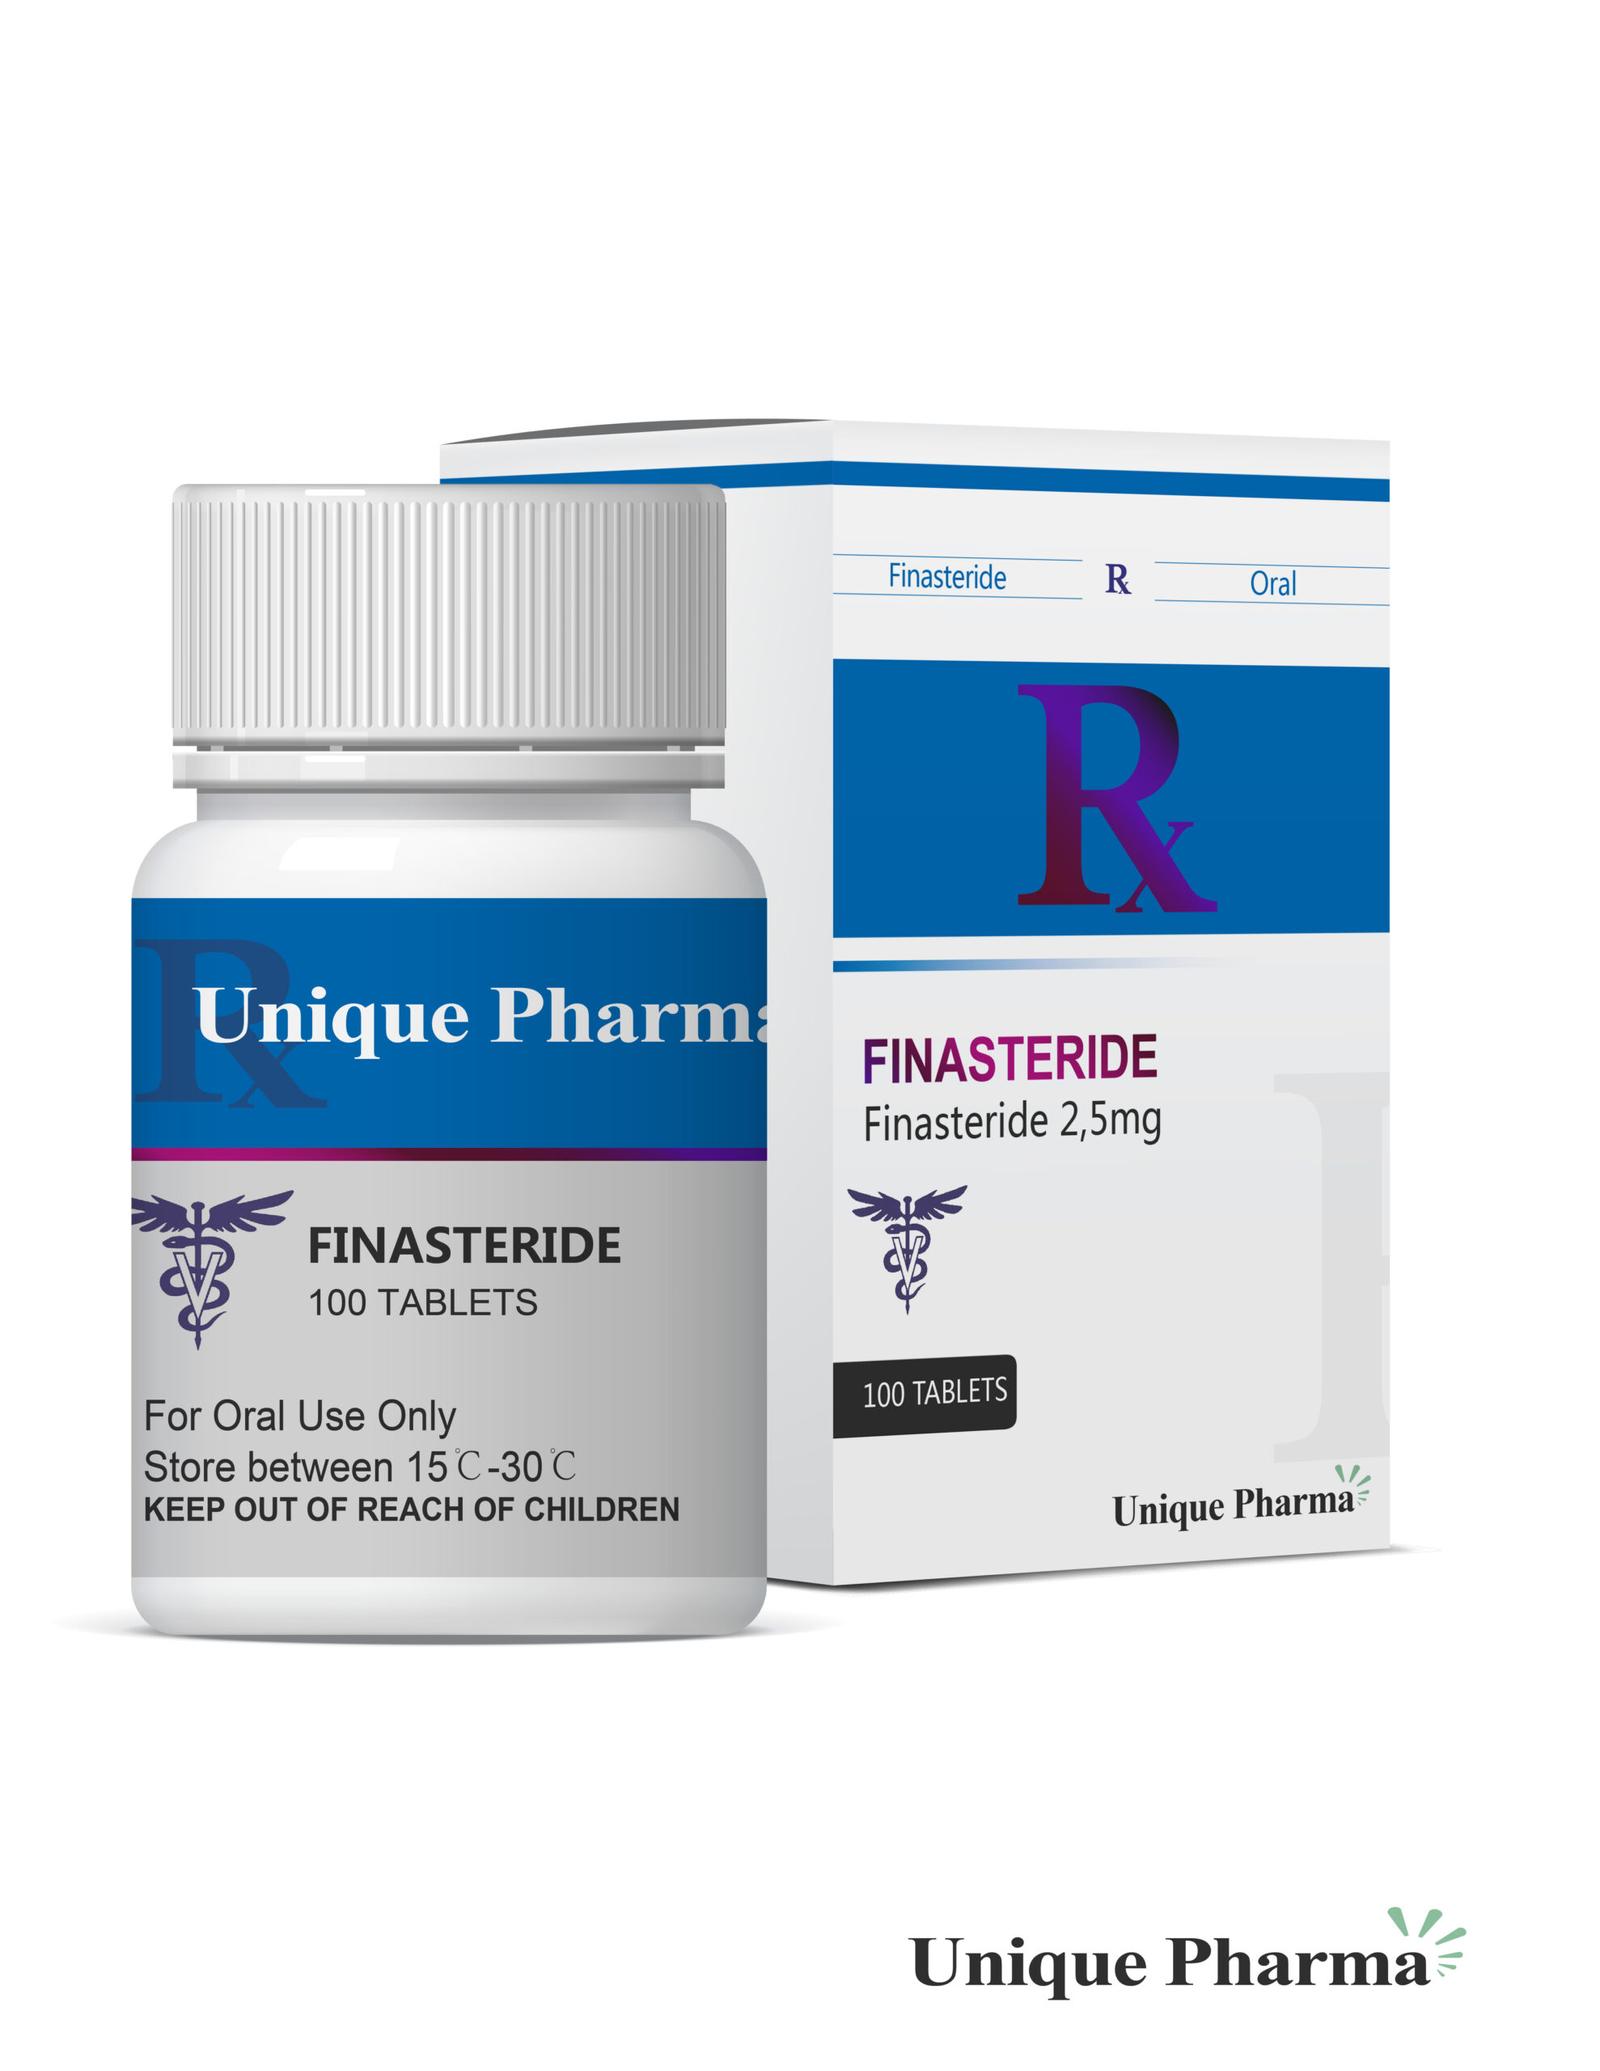 Finasteride 2,5 mg Unique Pharma kopen